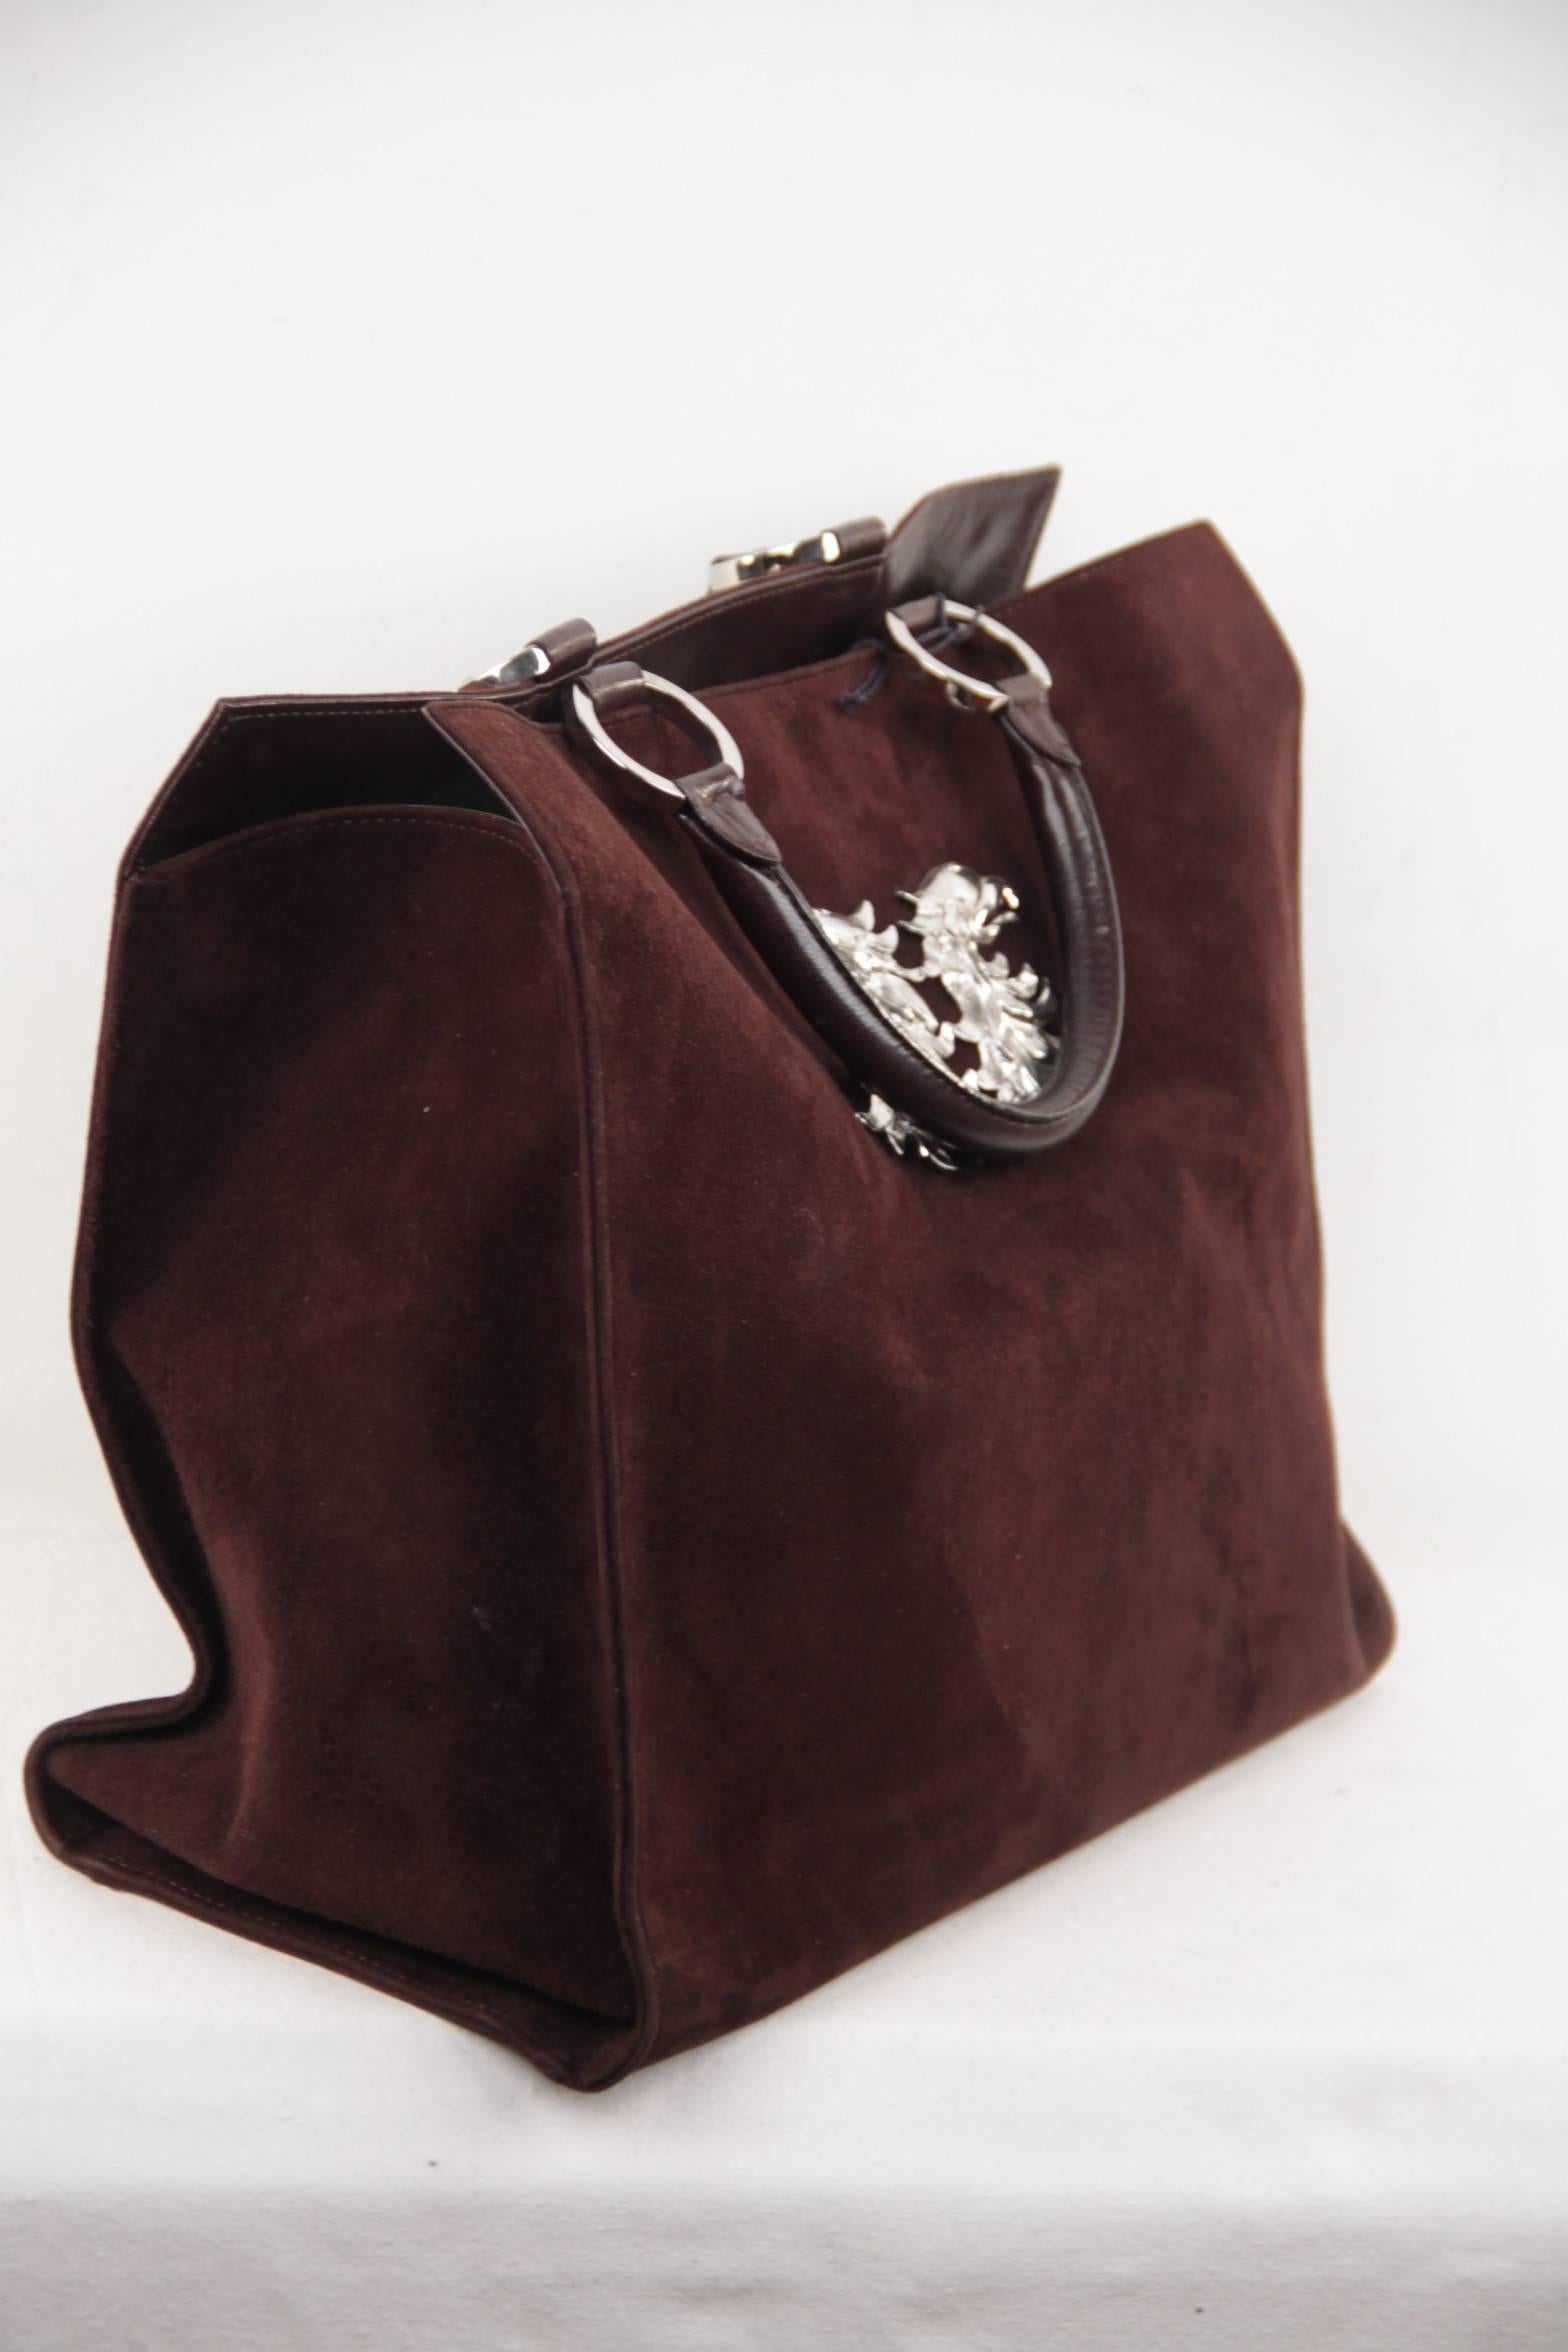 Black VALENTINO GARAVANI Italian Brown Suede Leather TOTE Shopping Bag HANDBAG 